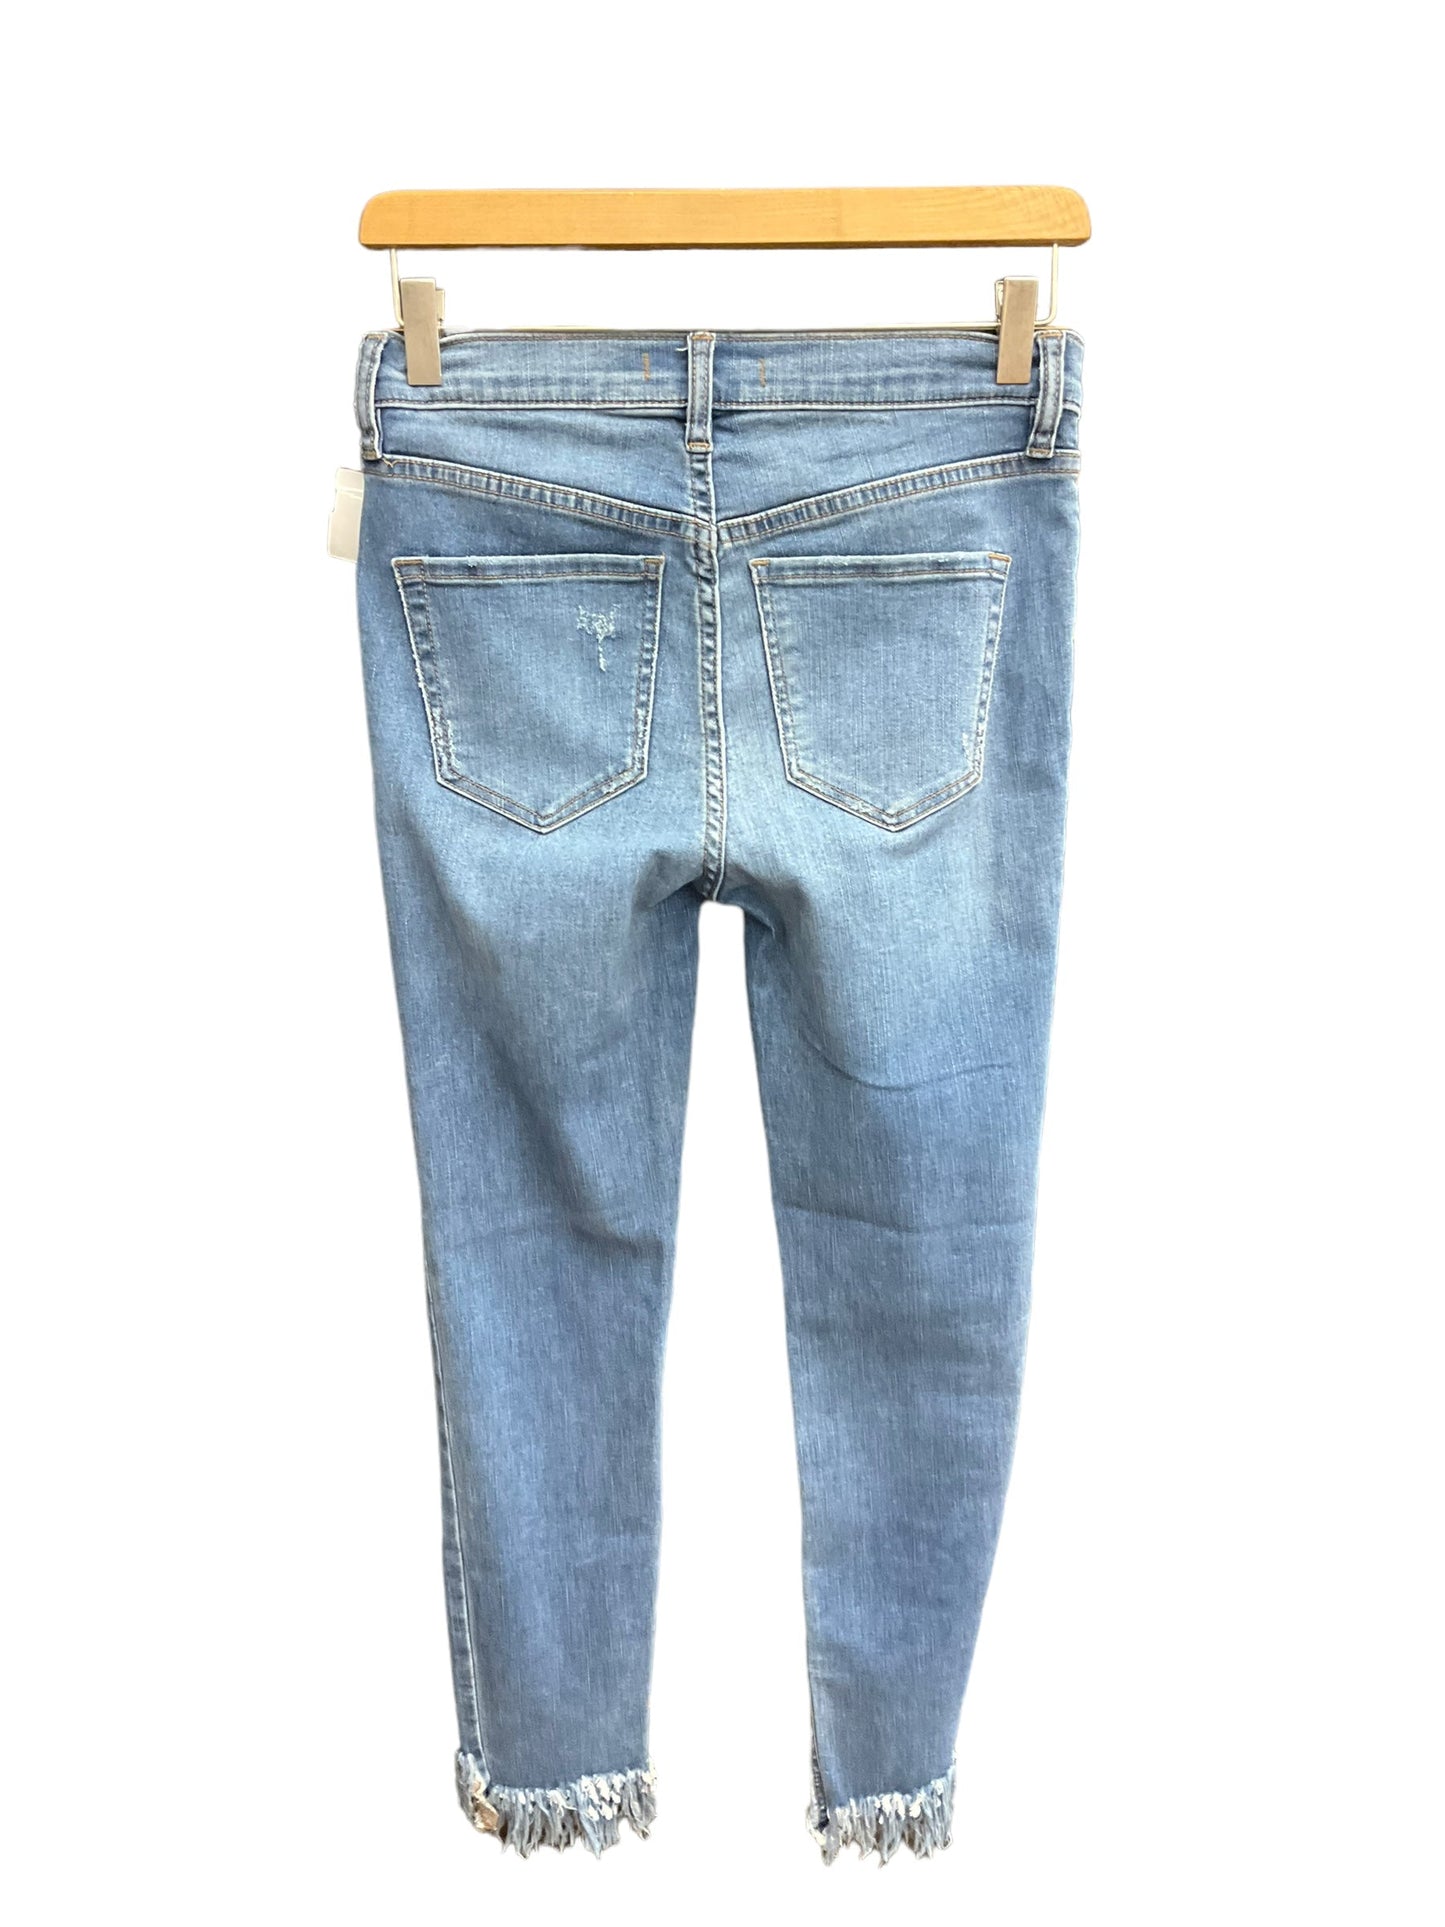 Blue Denim Jeans Skinny Free People, Size 2